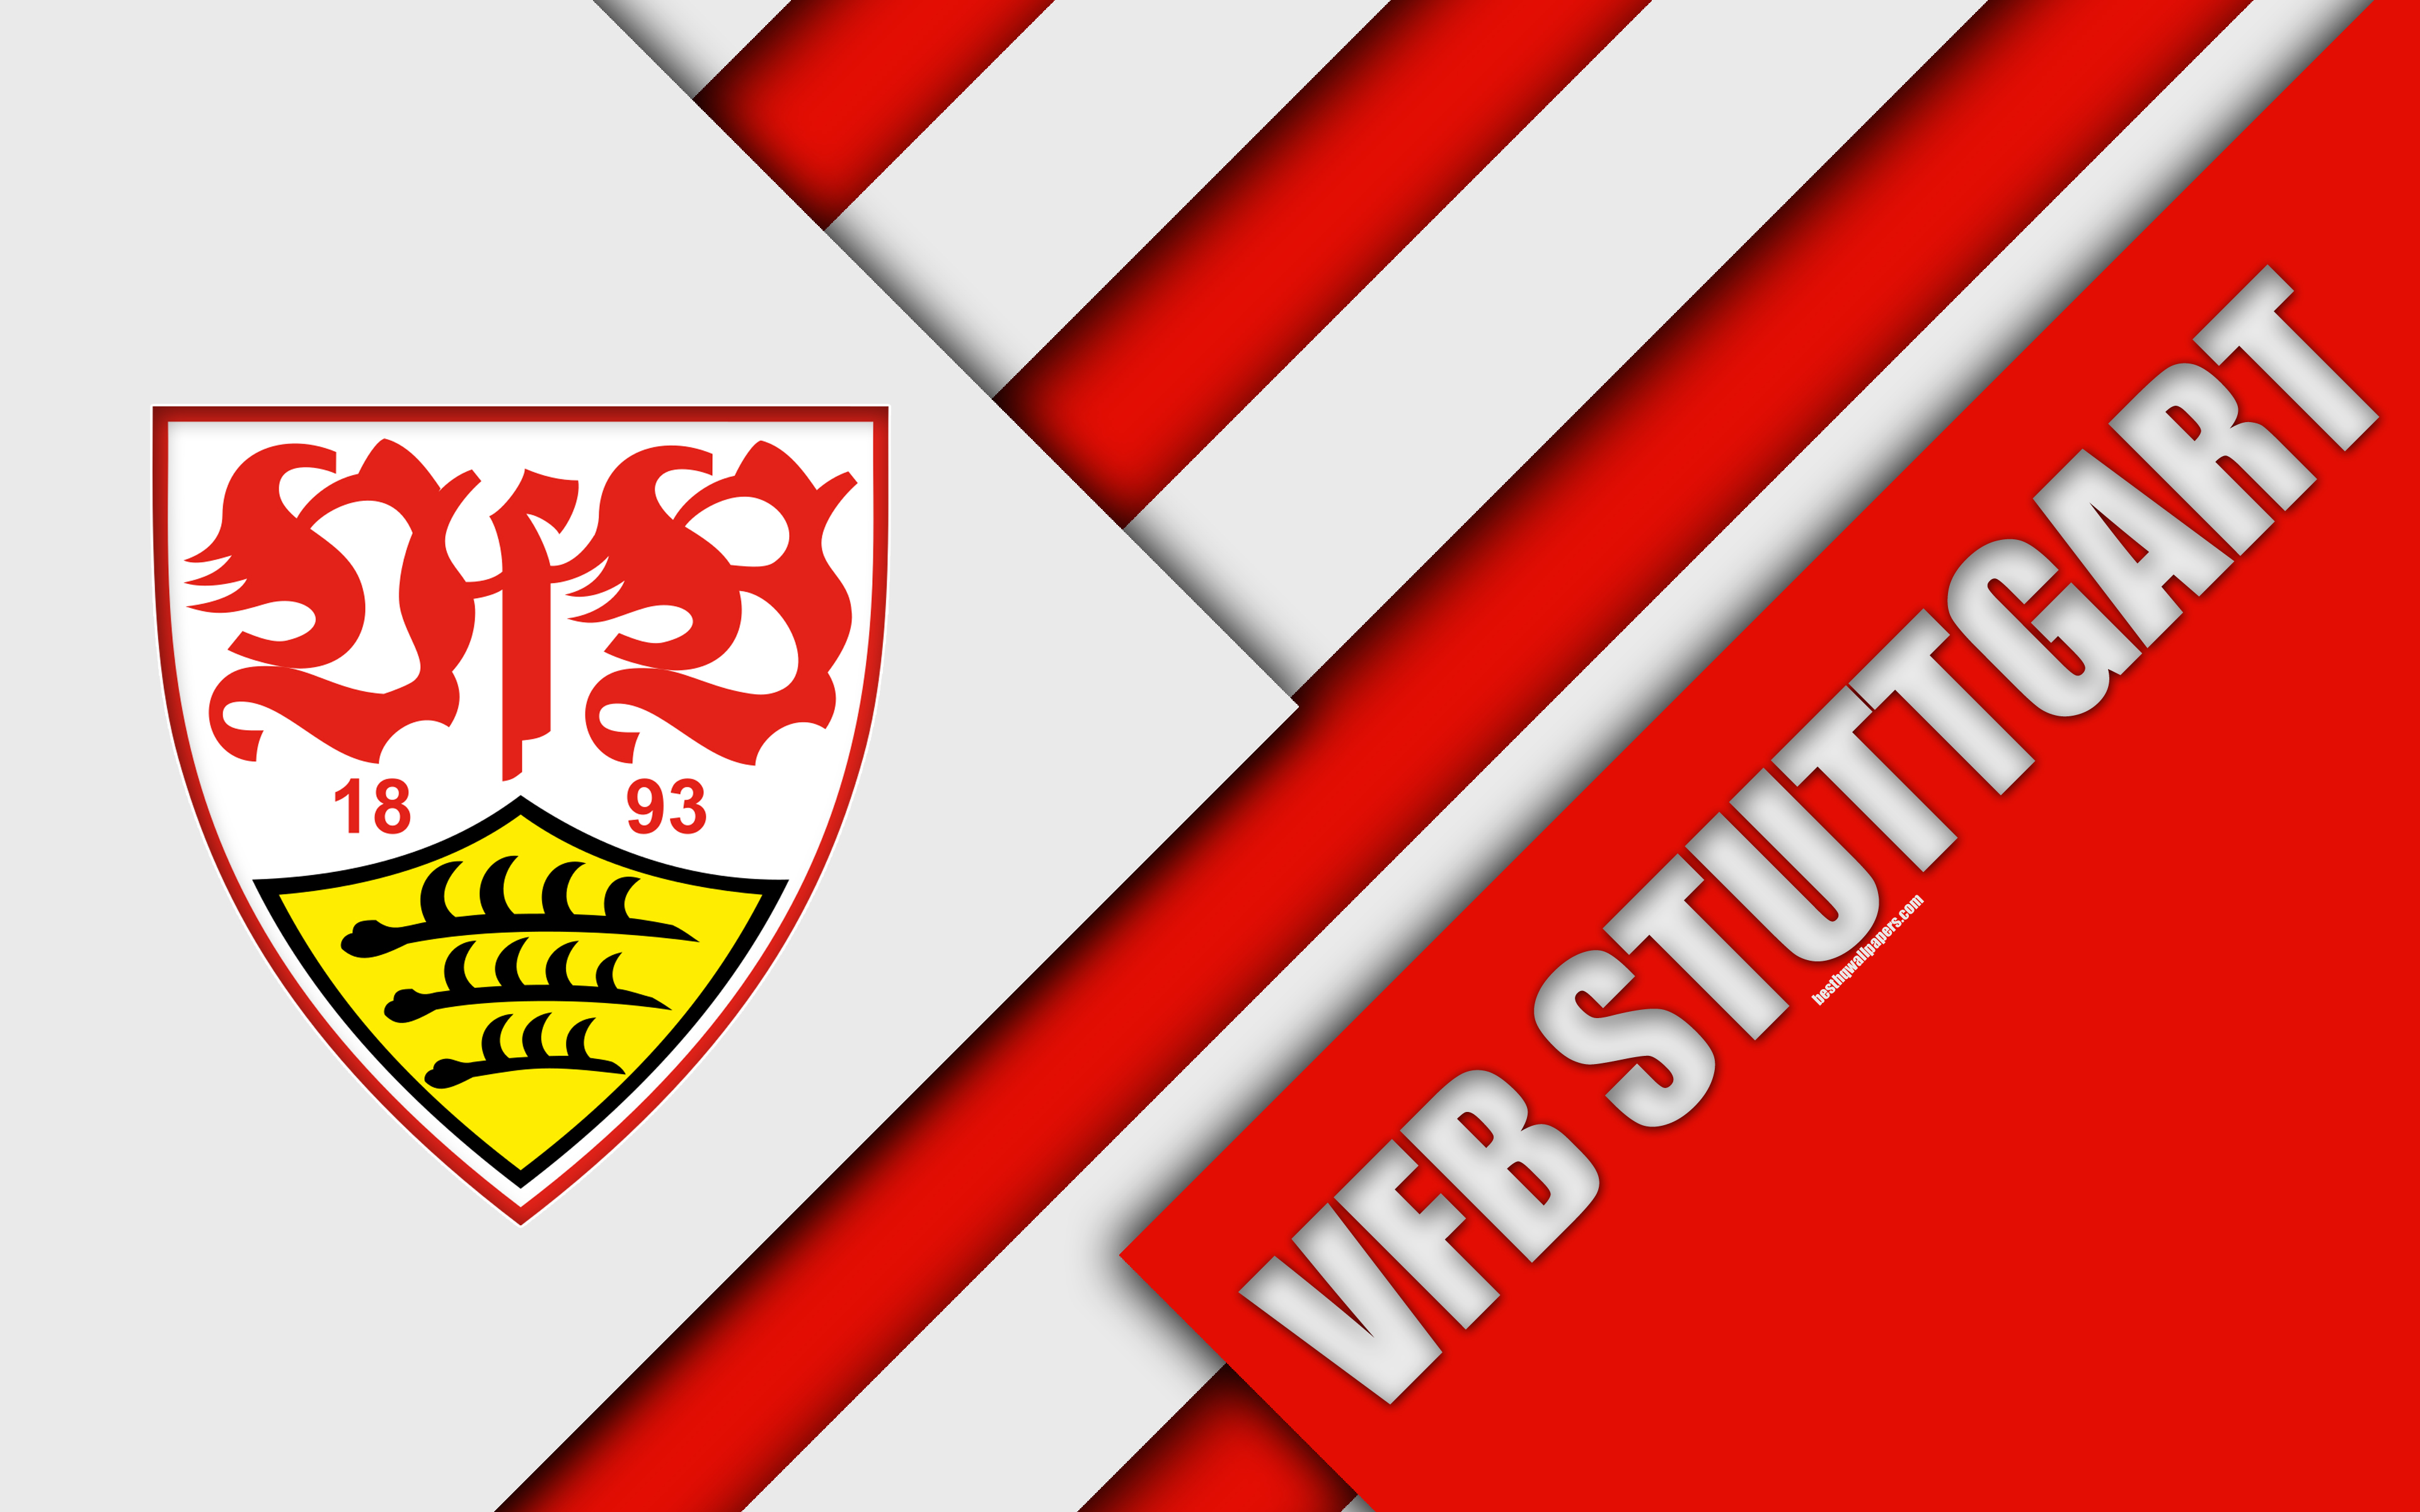 Download wallpaper VfB Stuttgart FC, 4k, material design, emblem